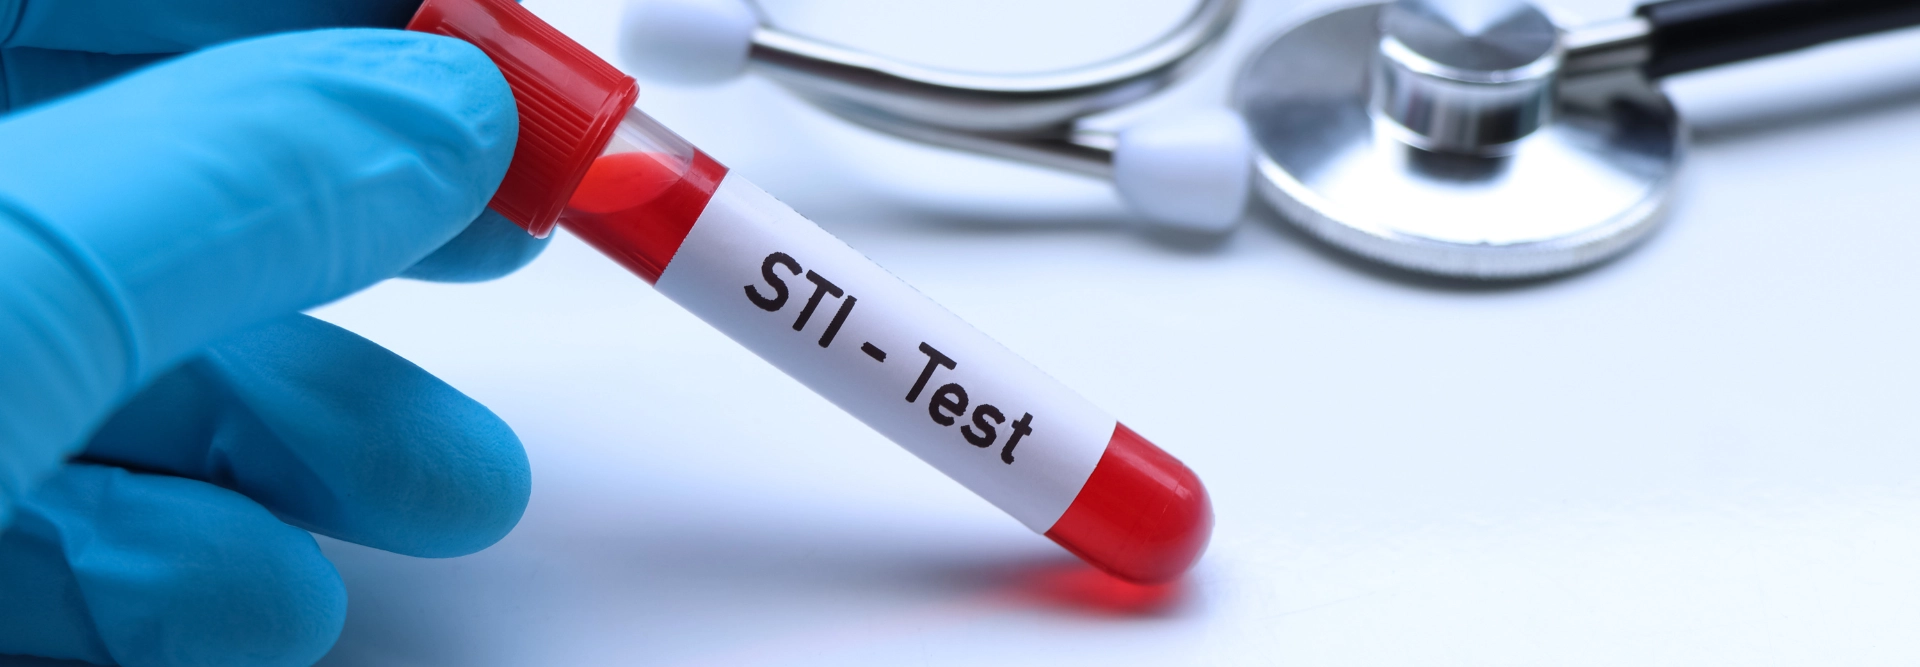 STI testing in Birmingham, Alabama and surrounding areas.